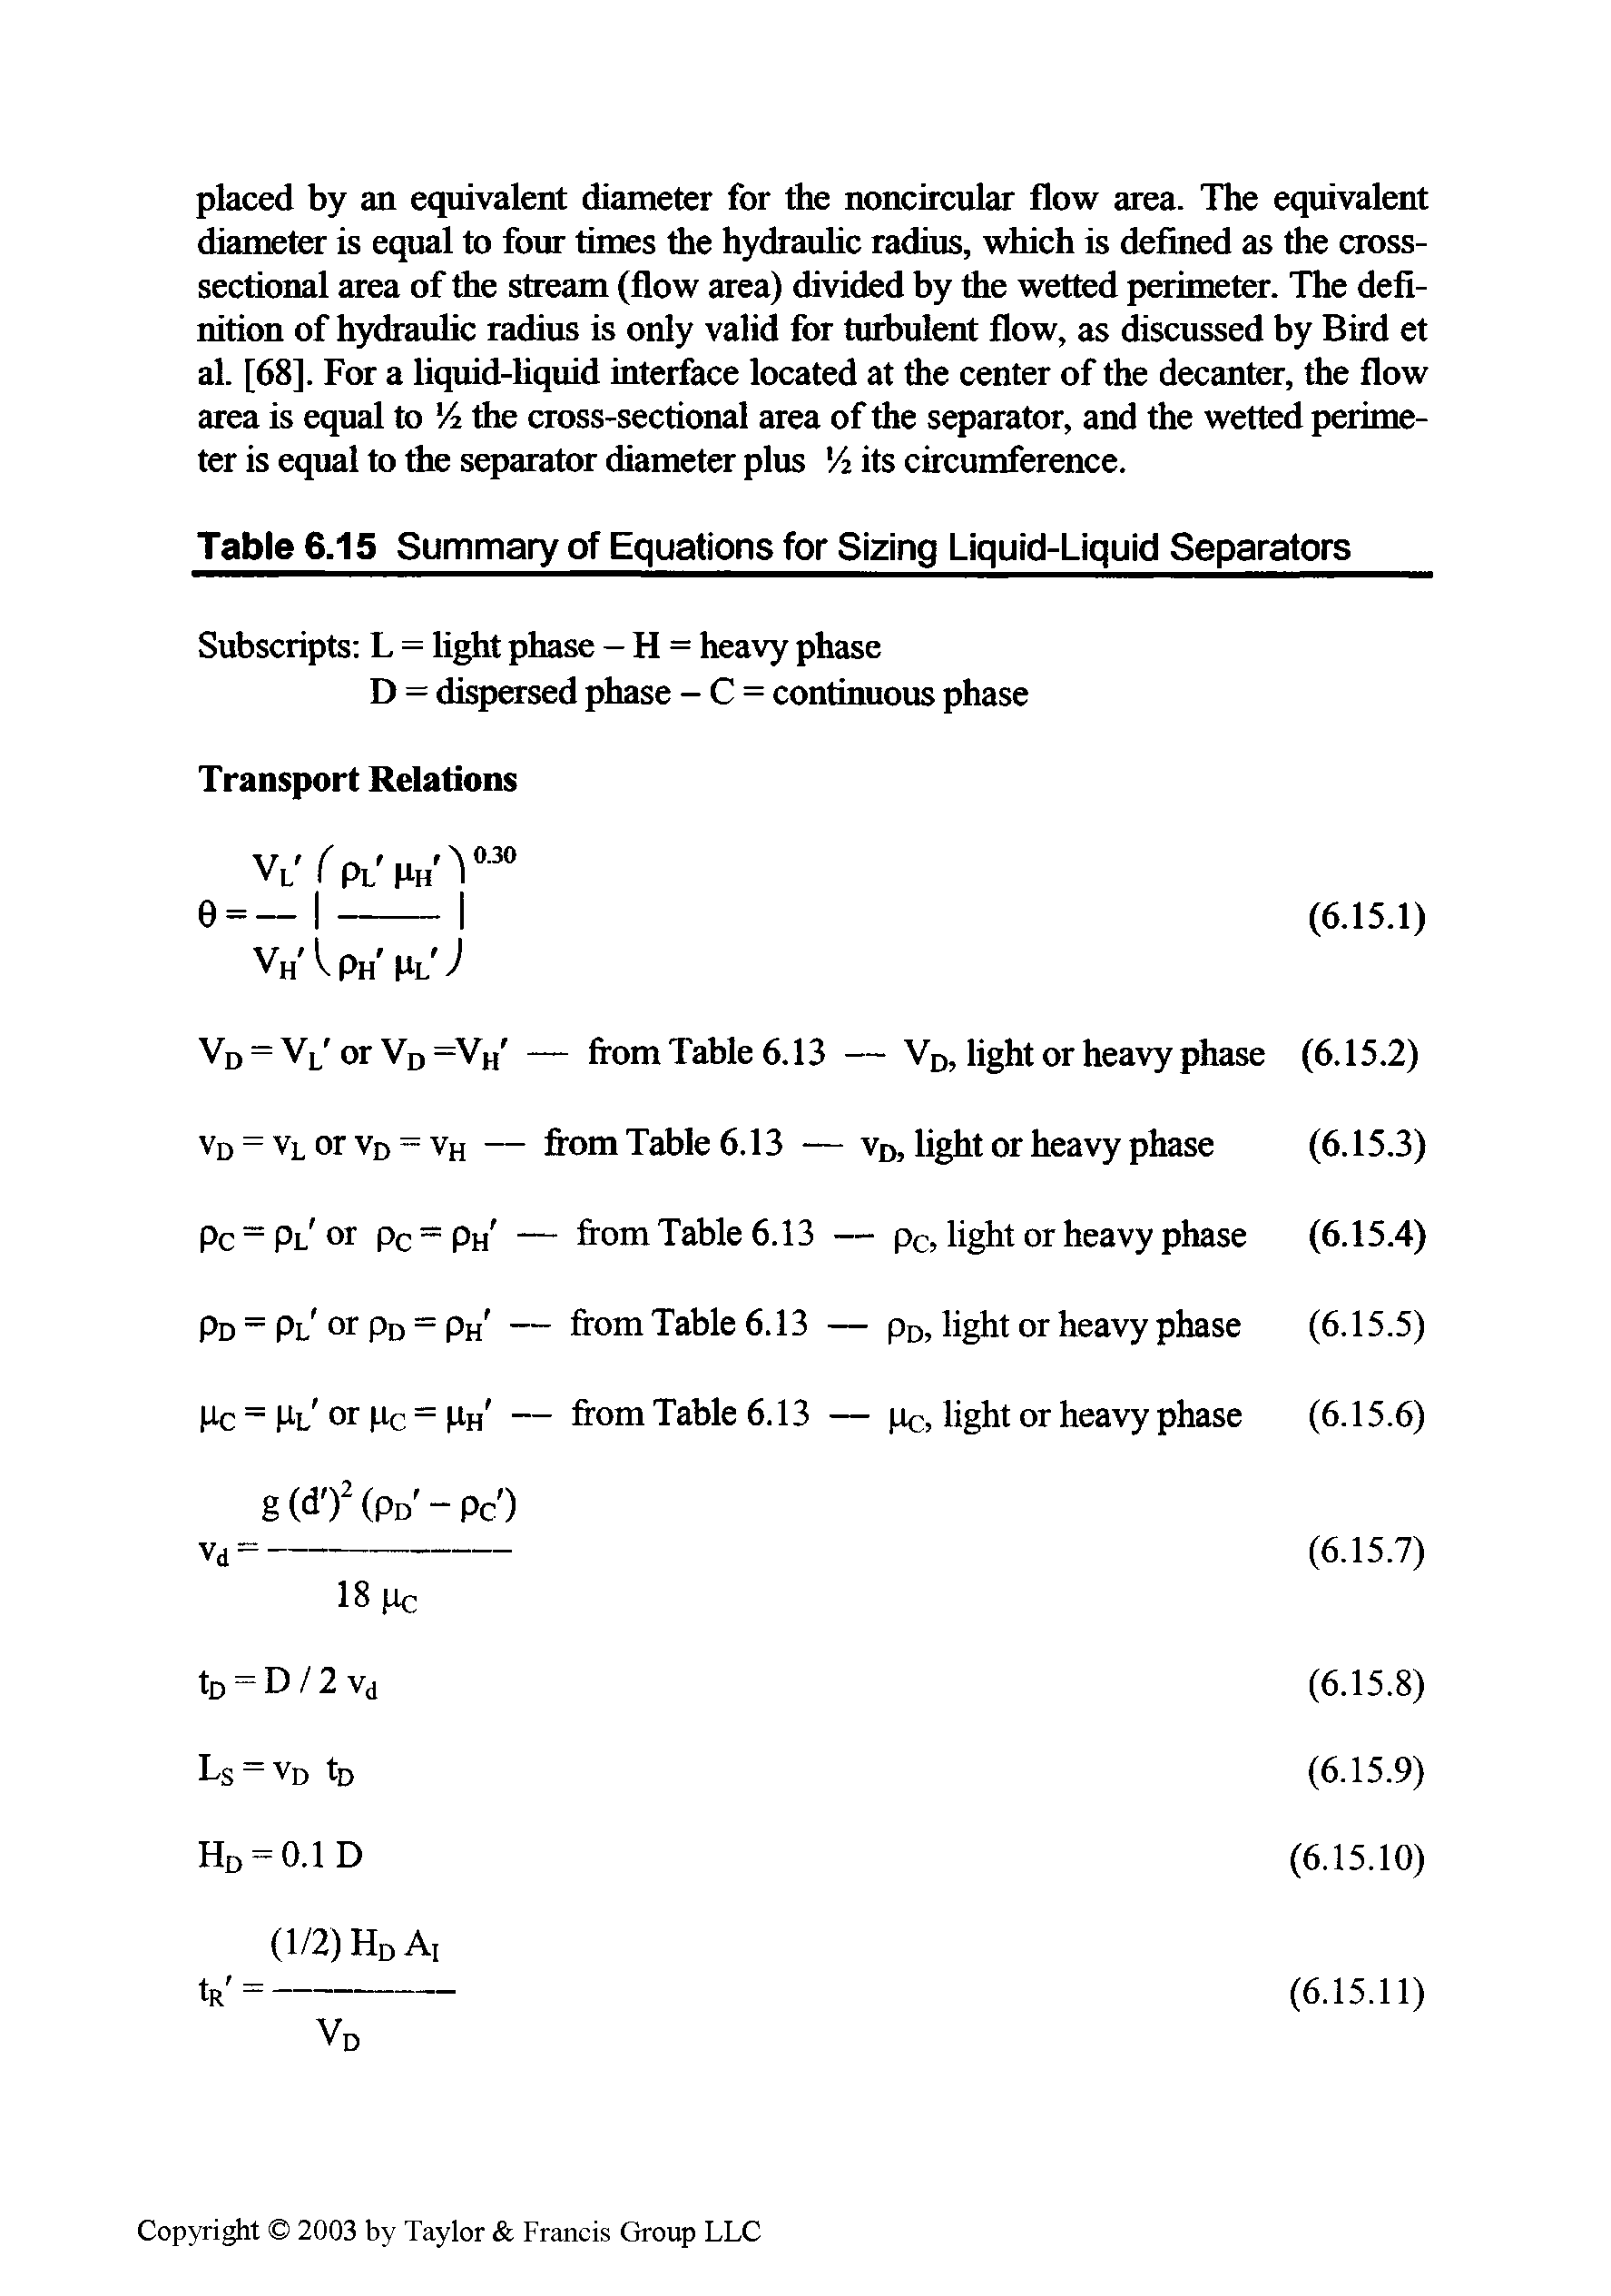 Table 6.15 Summary of Equations for Sizing Liquid-Liquid Separators...